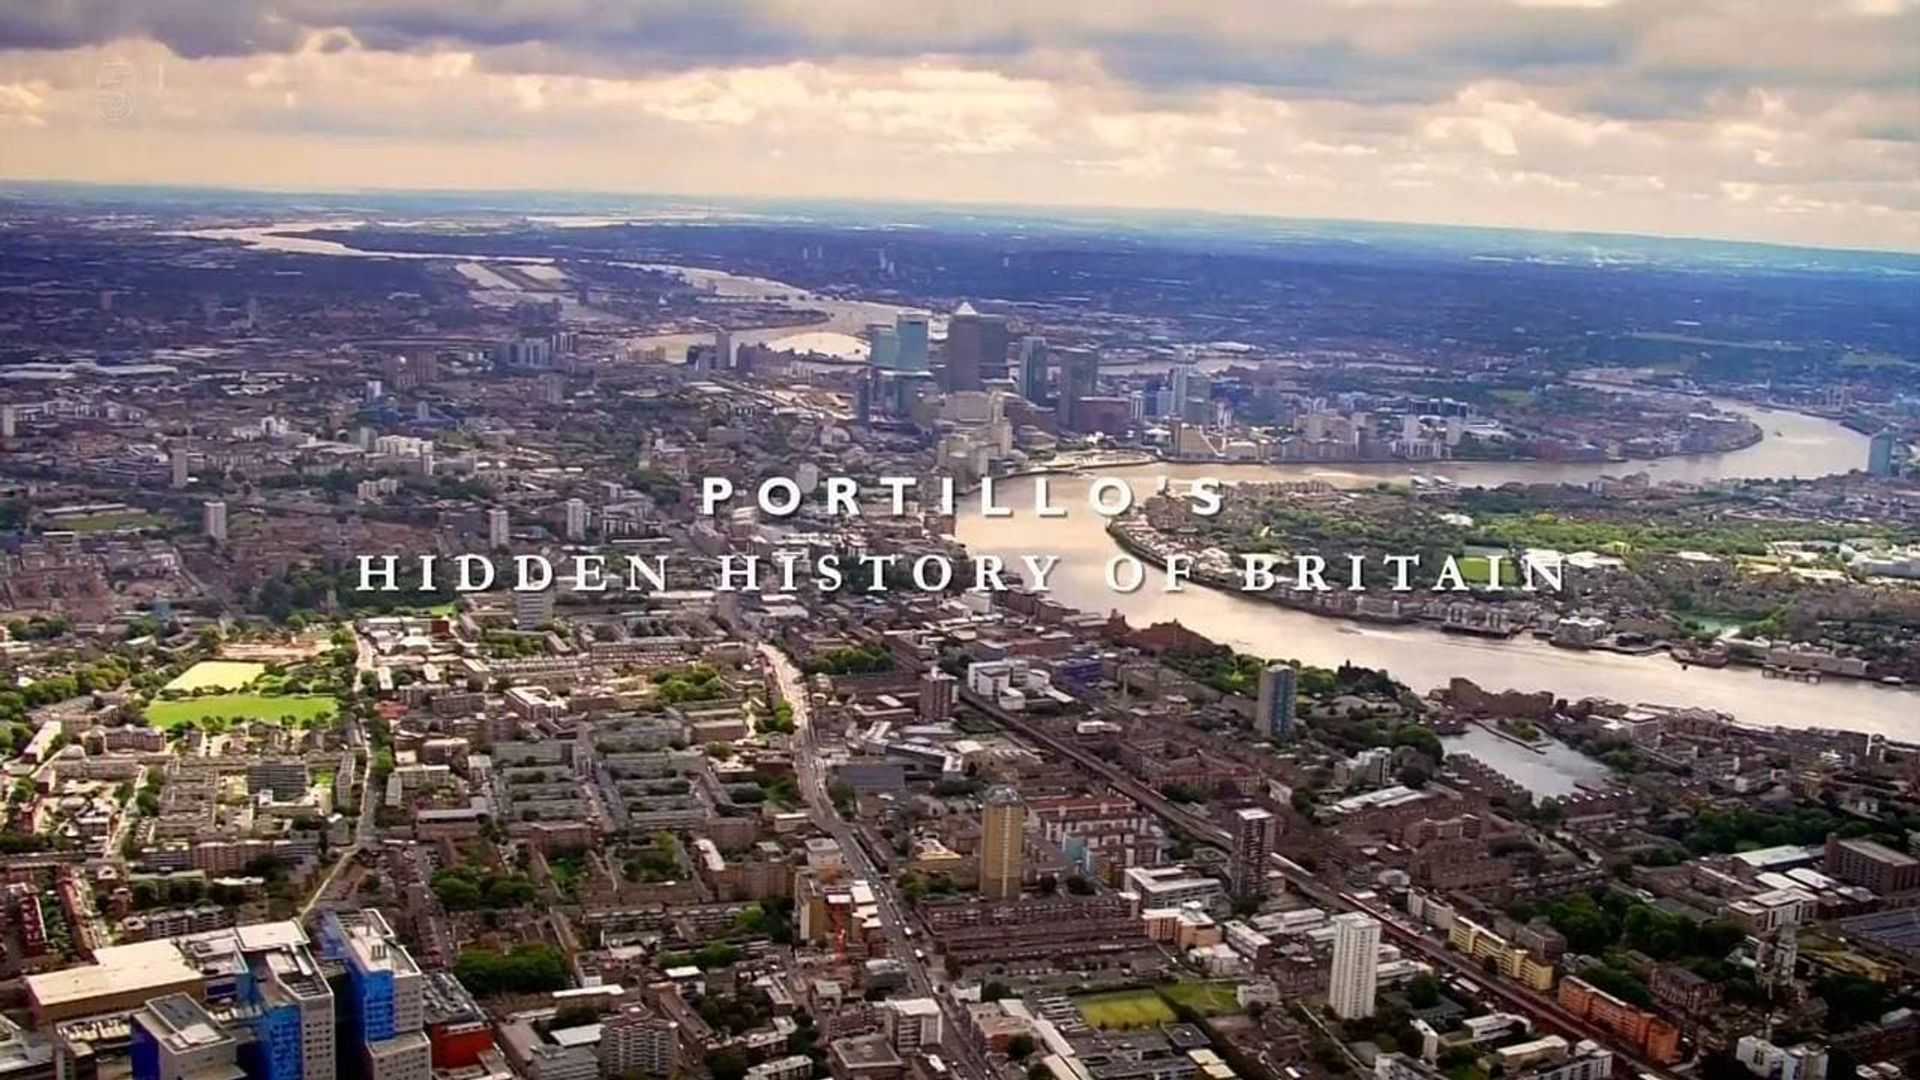 Portillo's Hidden History of Britain background